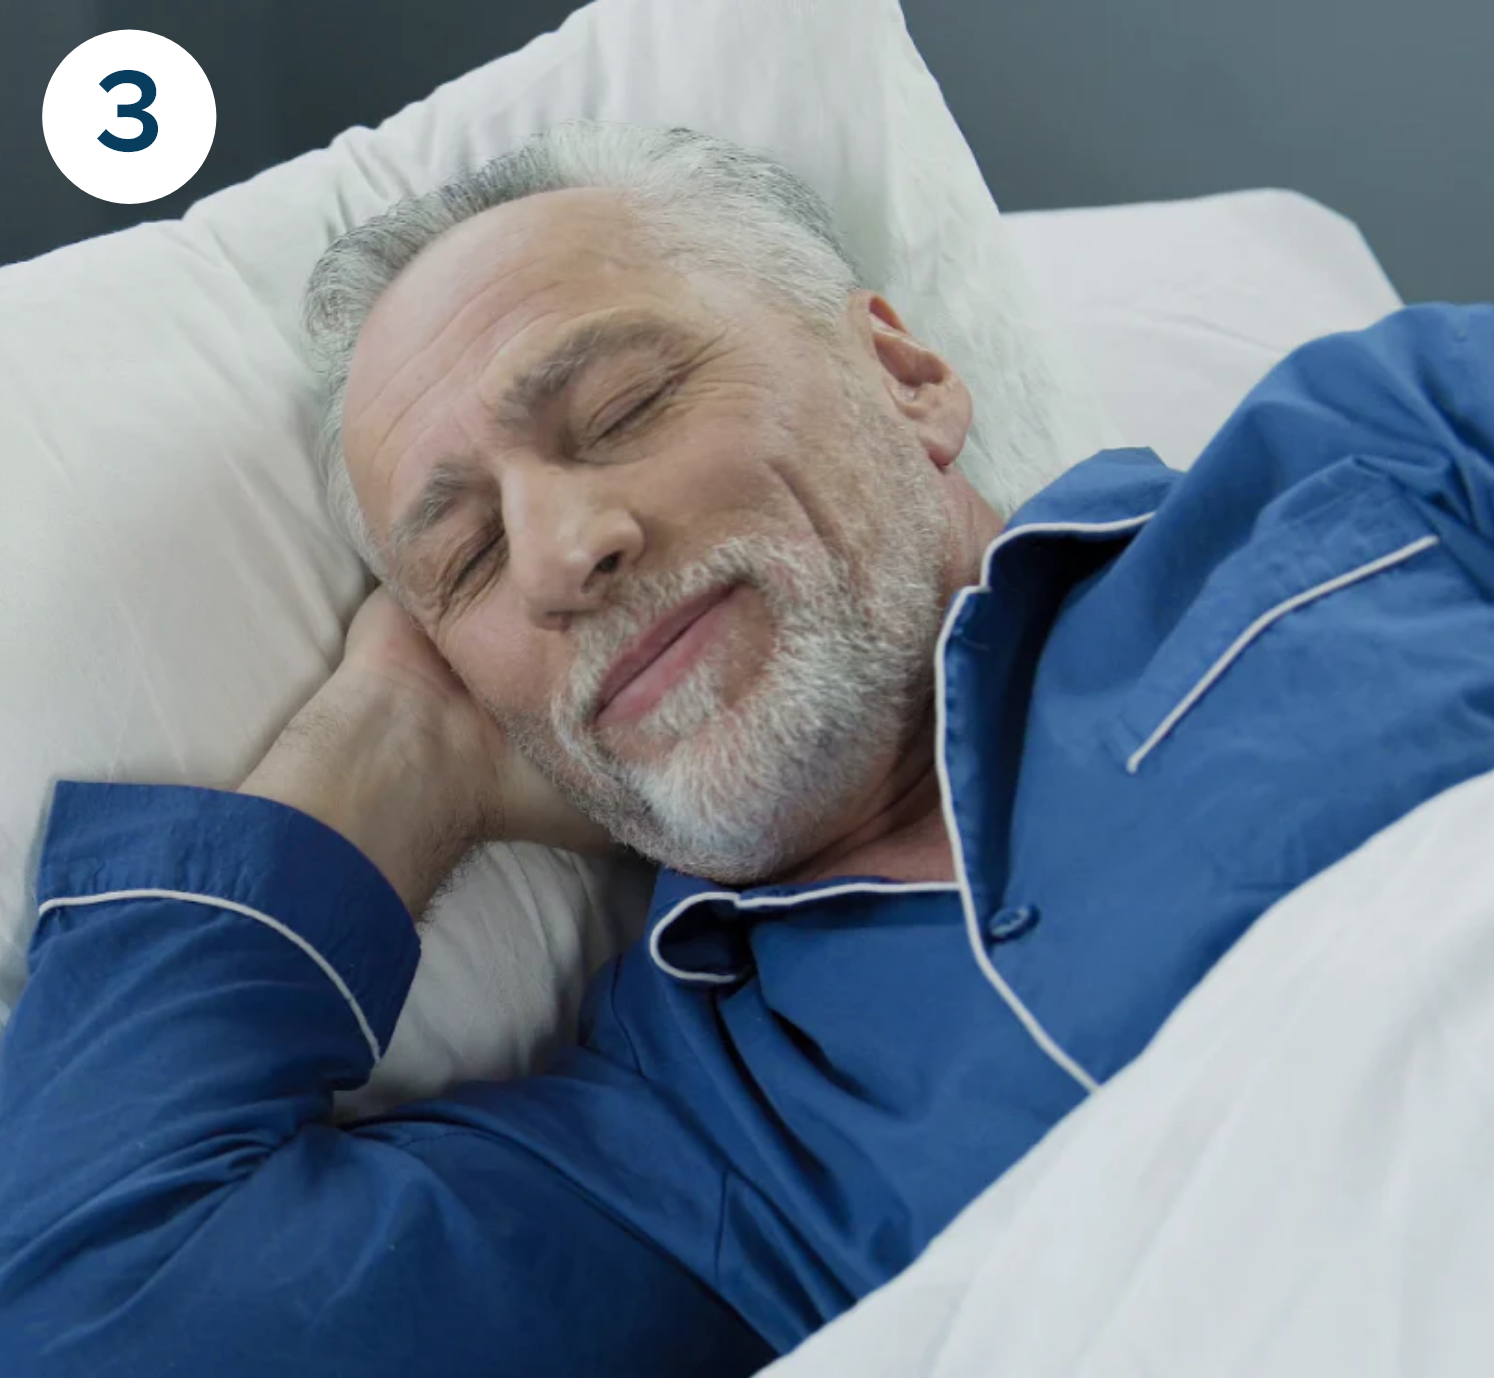 A senior man wearing blue sleepwear is sleeping soundly.